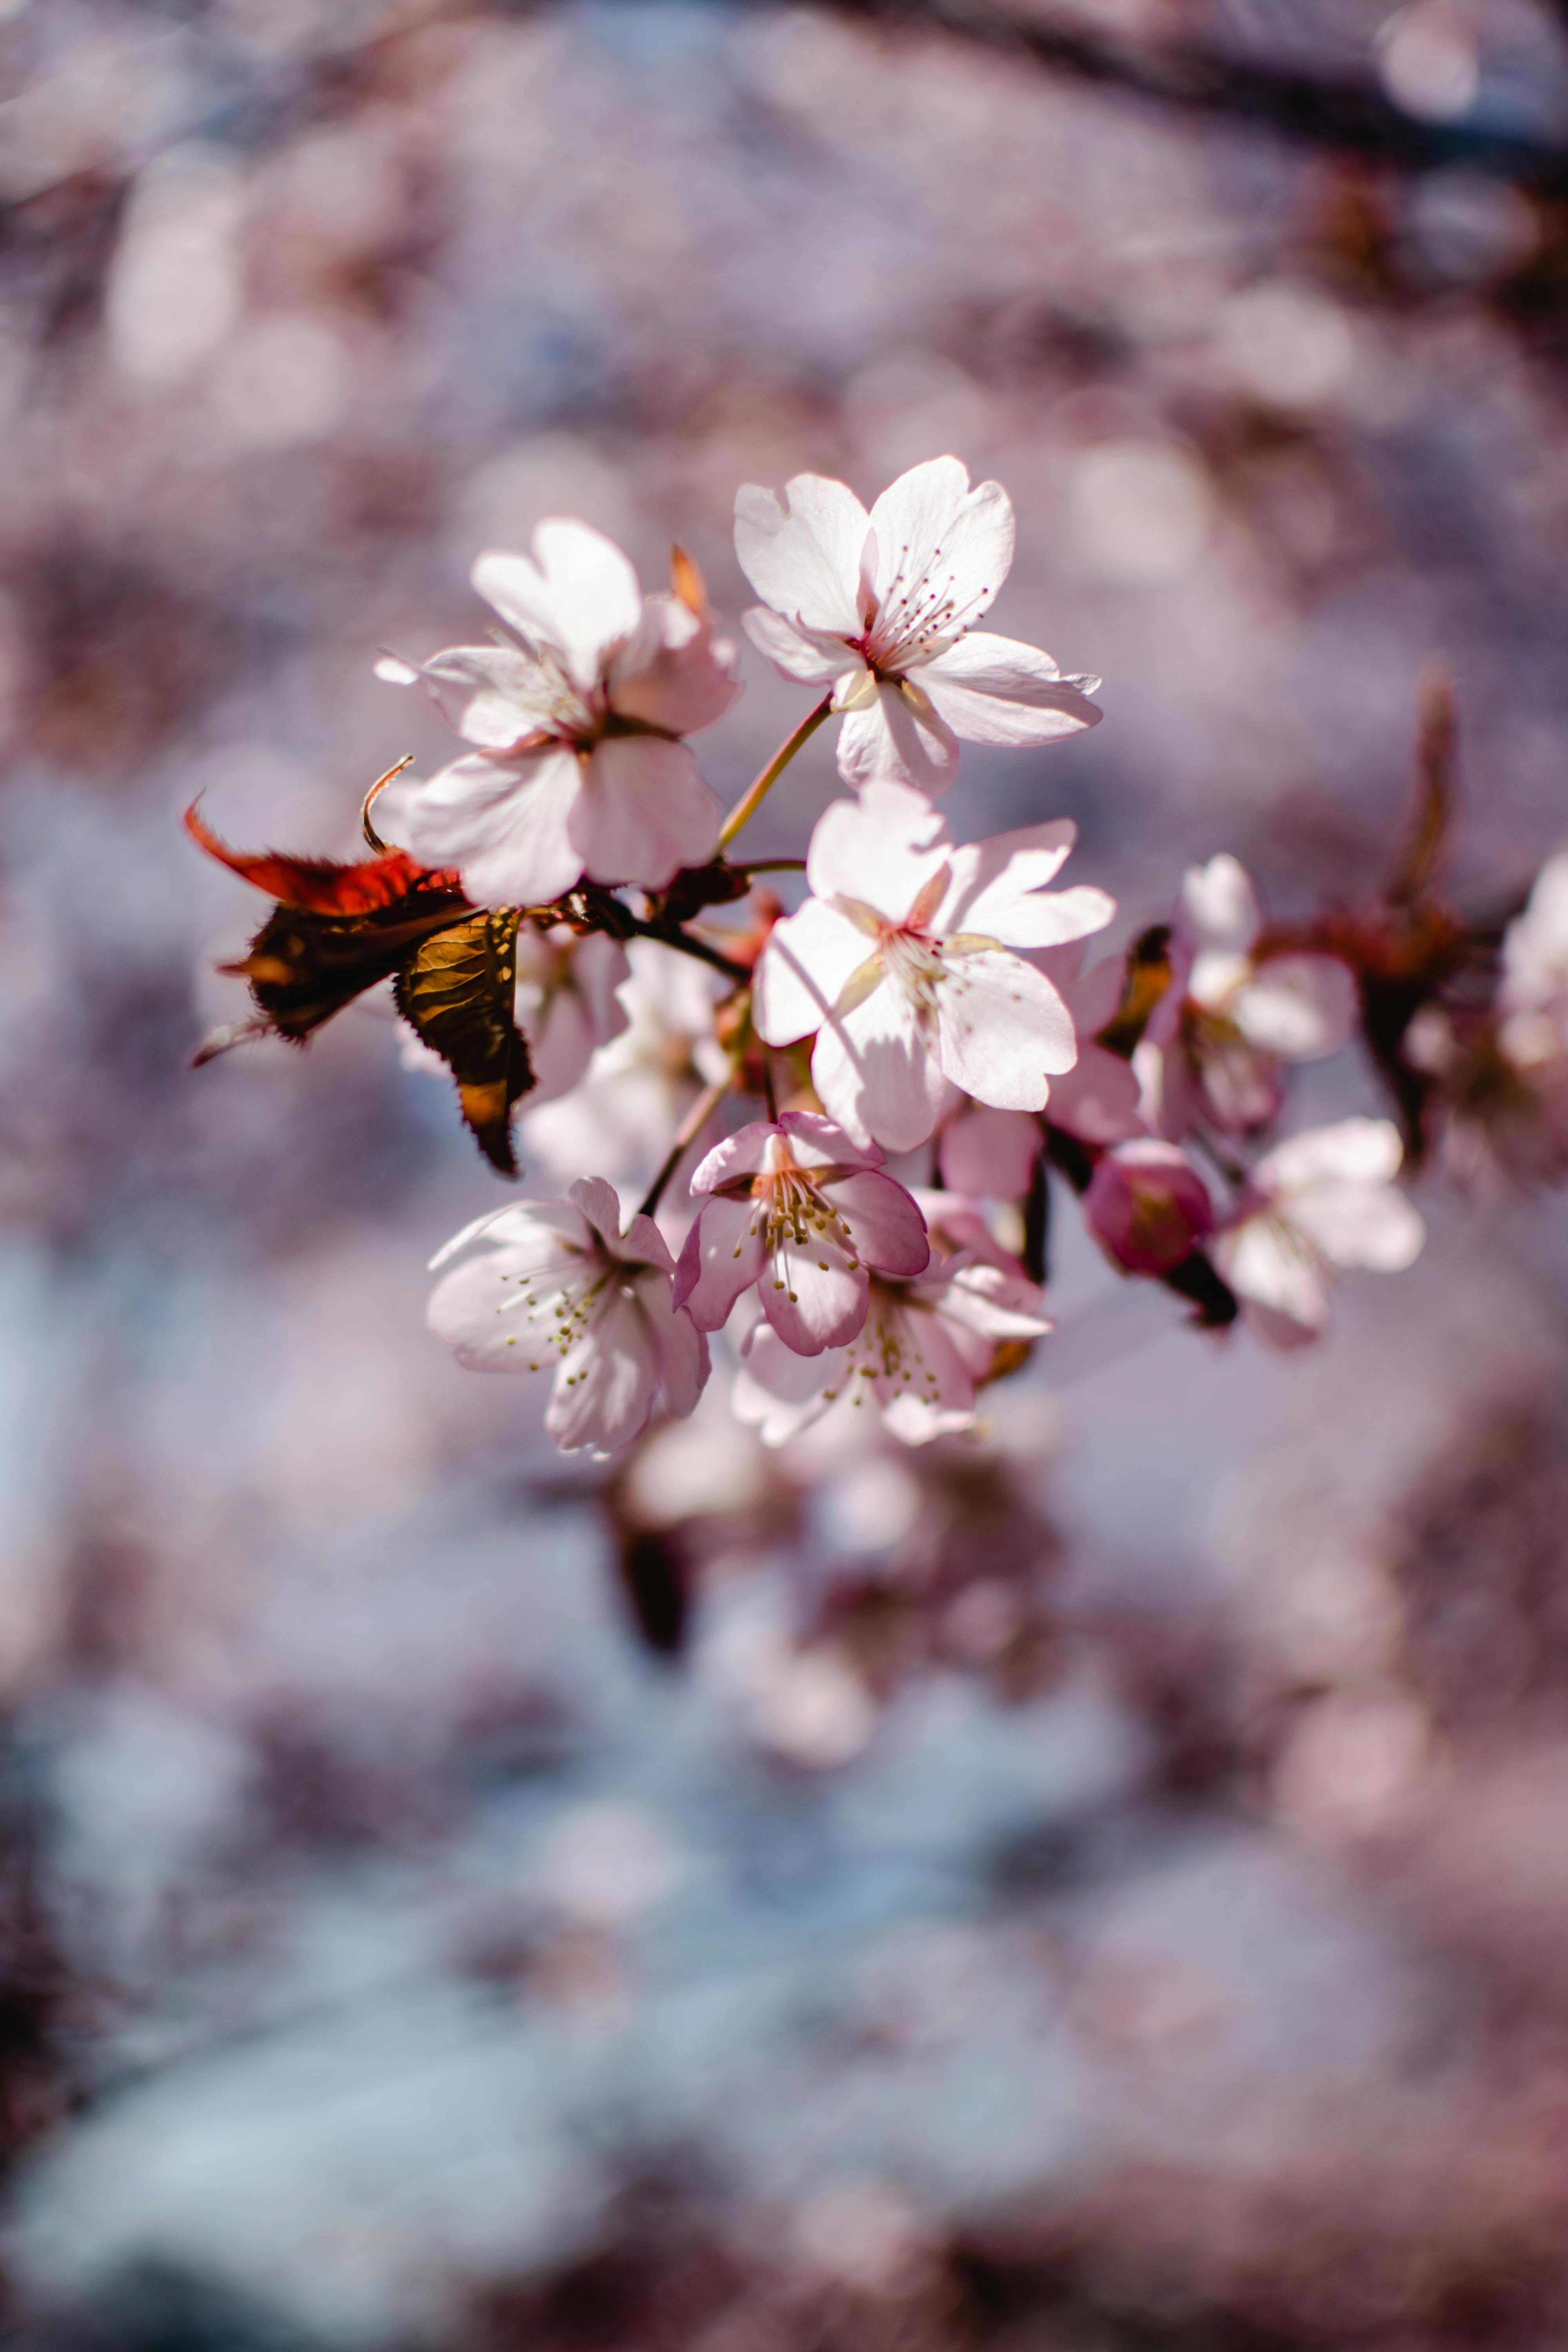 HD wallpaper plant cherry blossom kyoto park kyiv ukraine iphone  wallapaper  Wallpaper Flare